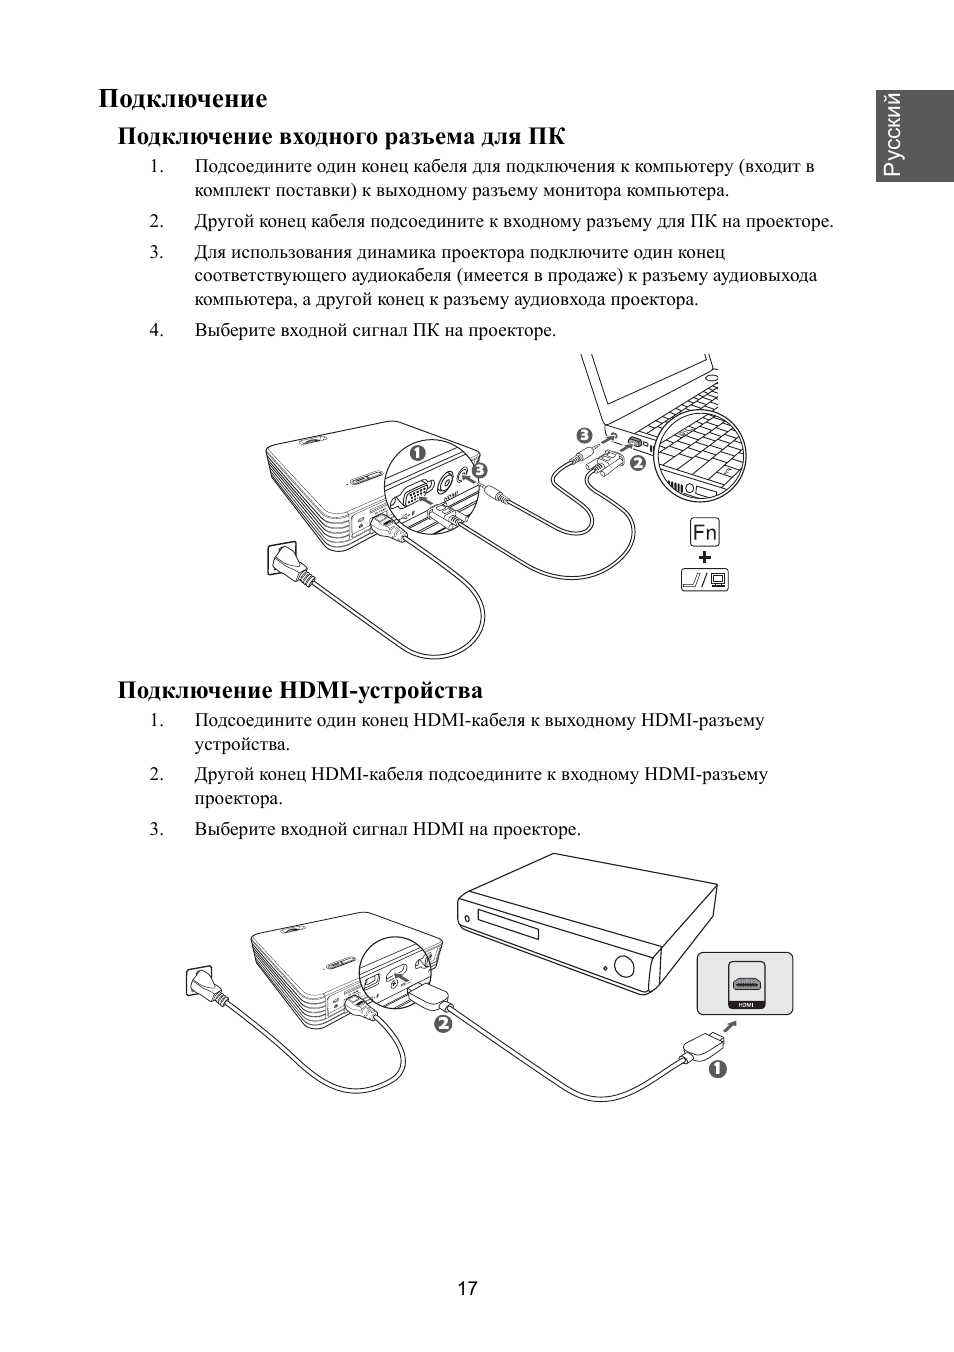 Подключение, Подключение входного разъема для пк, Подключение hdmi-устройства | Инструкция по эксплуатации Canon LE-5W | Страница 18 / 22